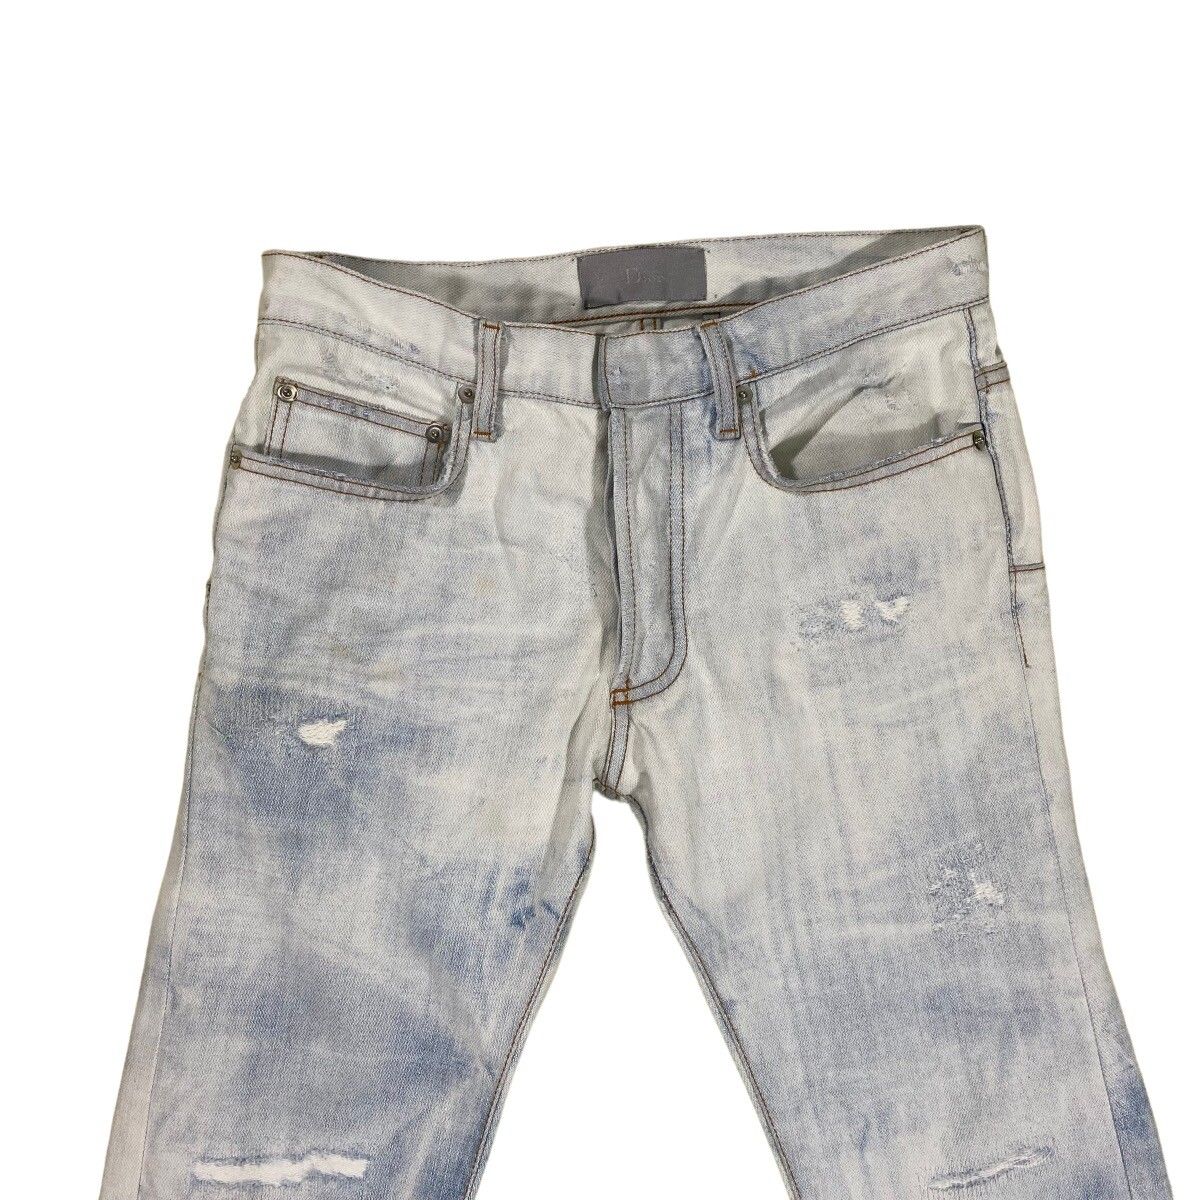 Dior Homme SS06 Dirty Snow Denim Jeans - 5